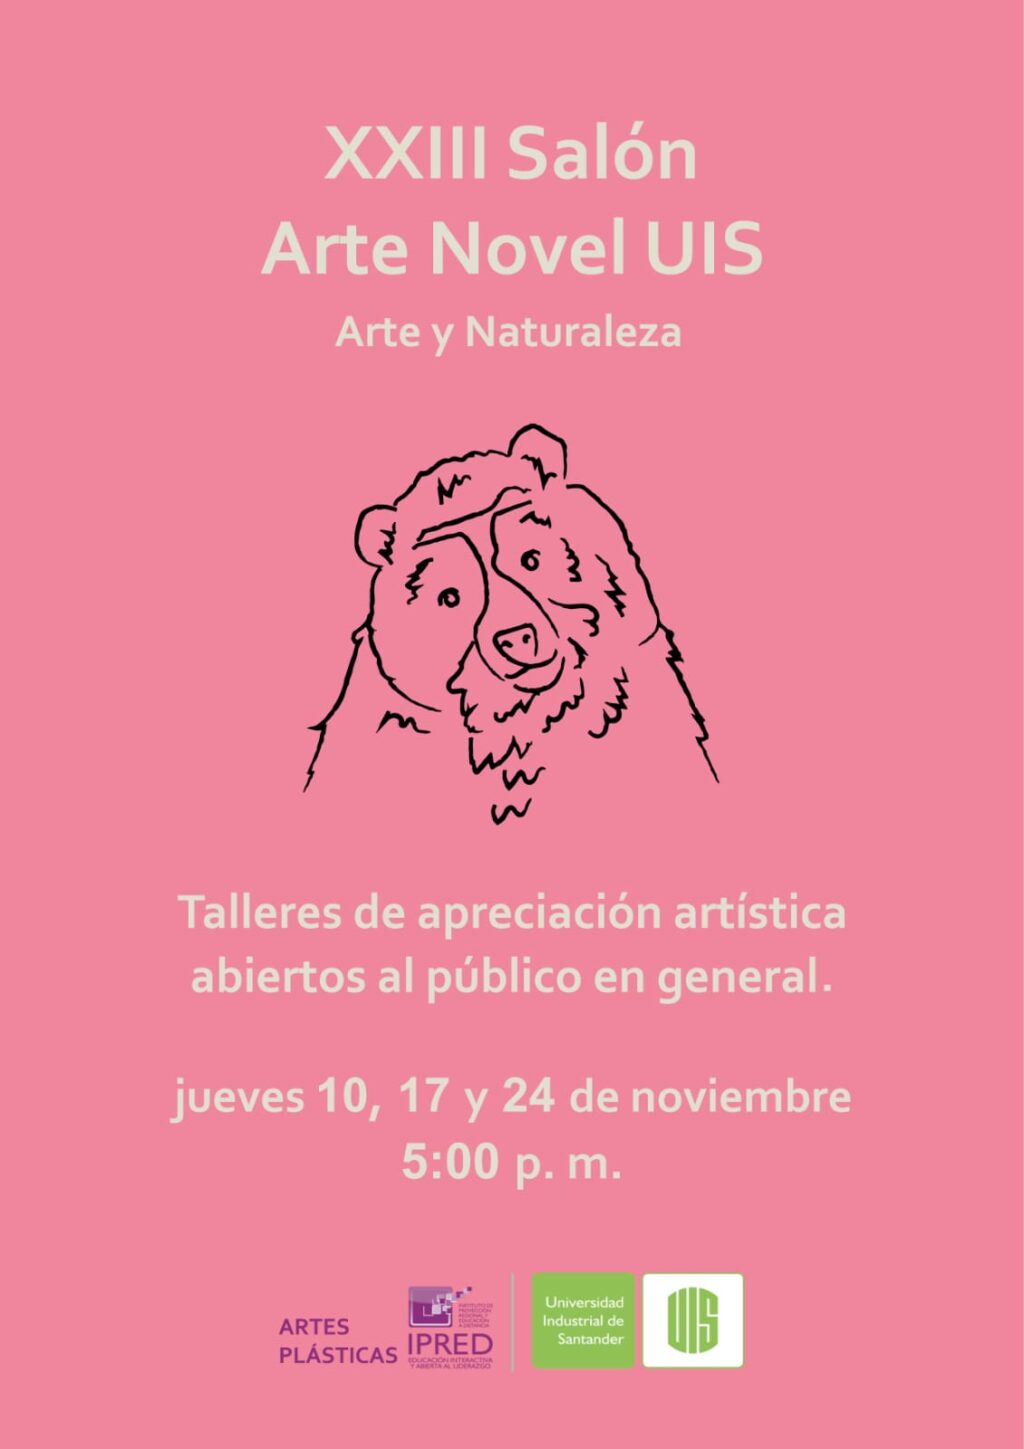 XXIII Salón de Arte Novel, Arte y Naturaleza UIS.